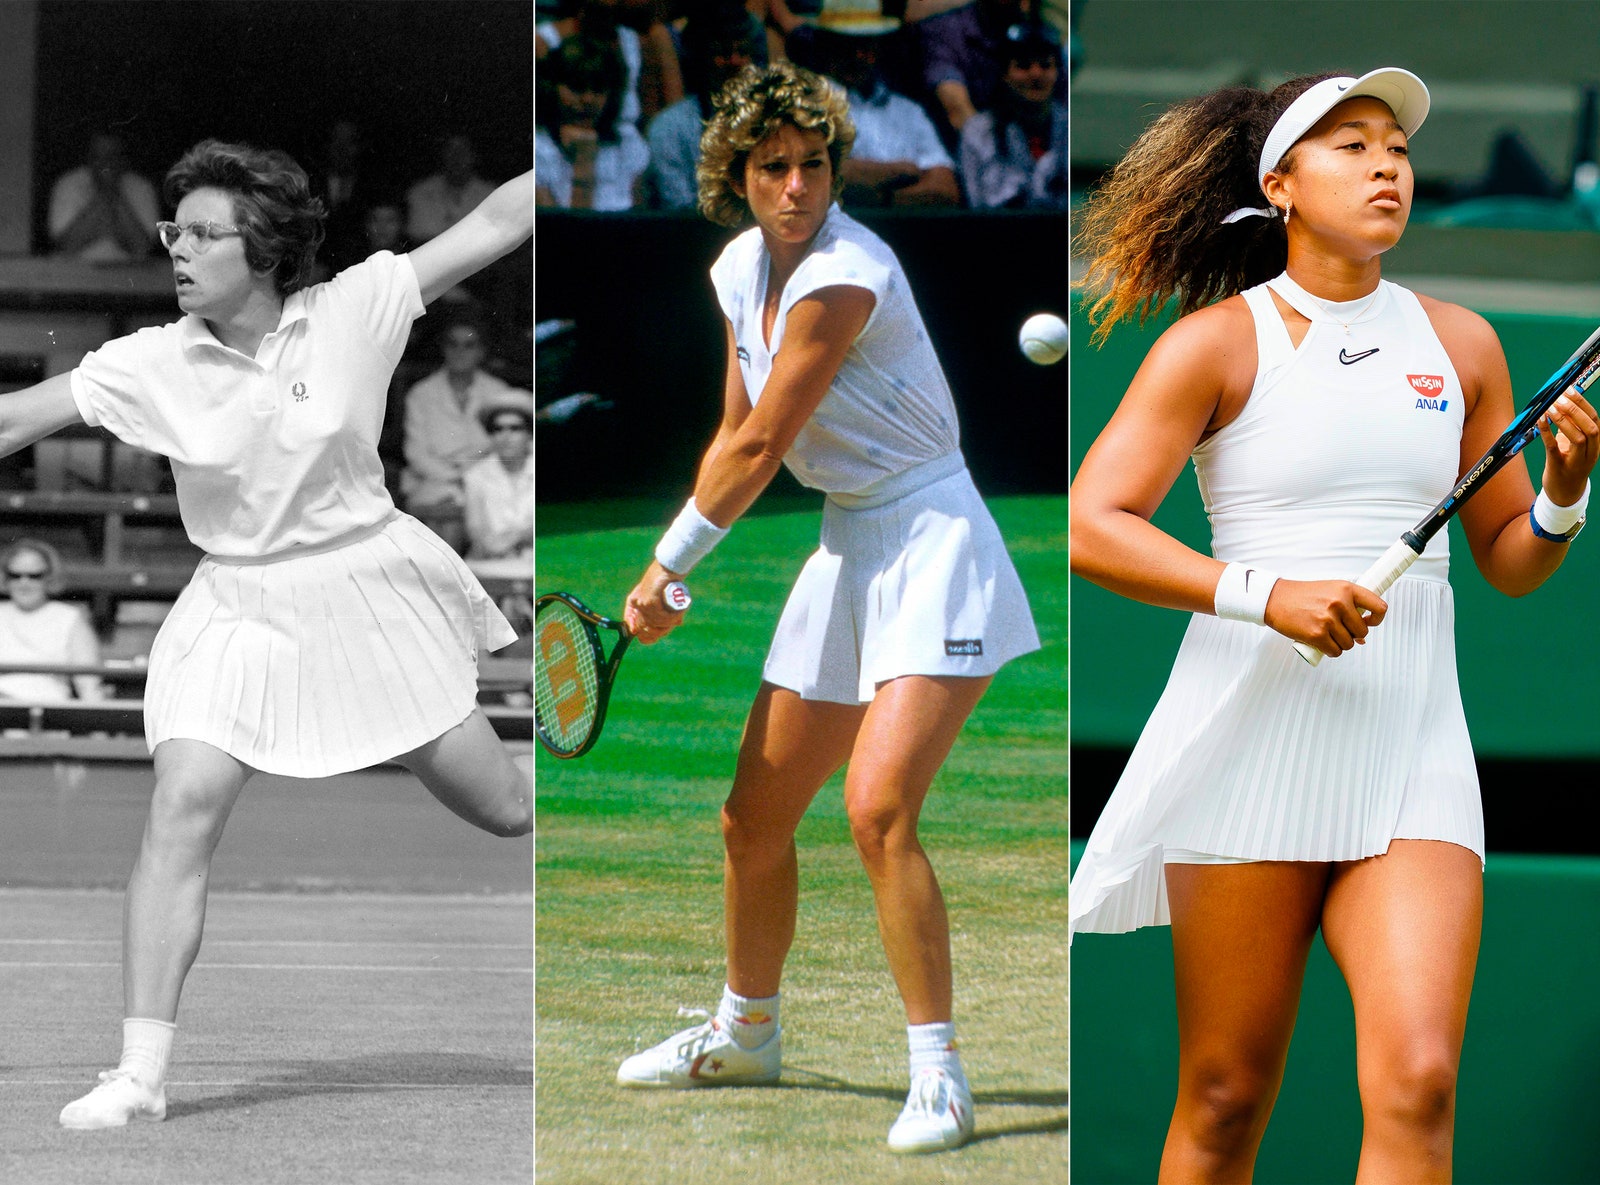 Billie Jean King Christ Evert Lloyd y Naomi Osaka en diferentes dcadas de Wimbledon pero siempre de blanco.